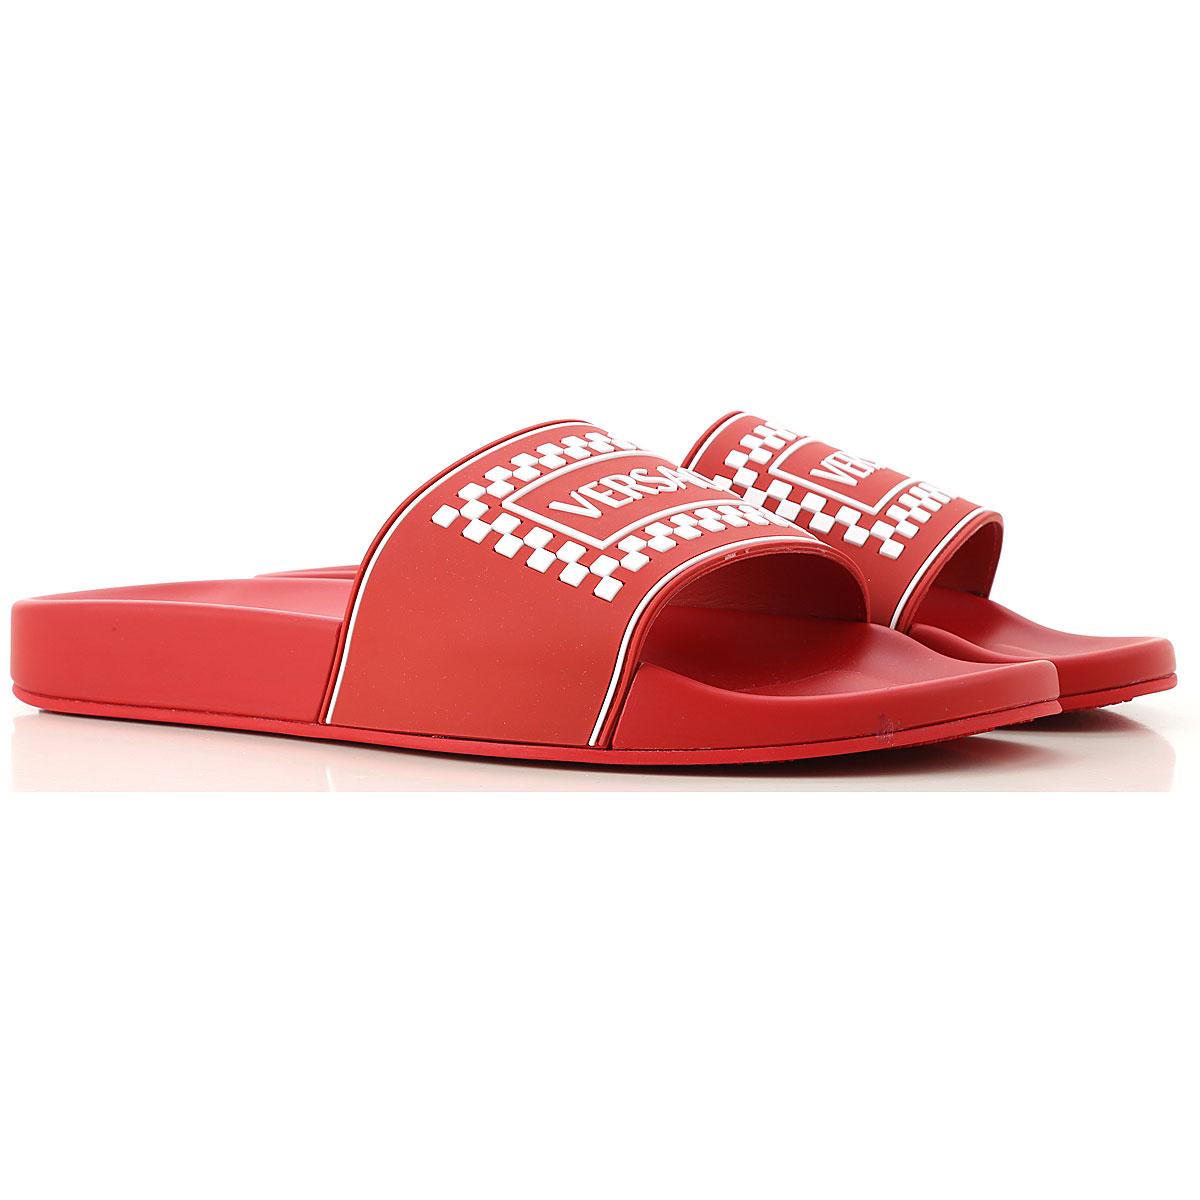 Versace Flip Flops For Men On Sale in Red for Men - Lyst